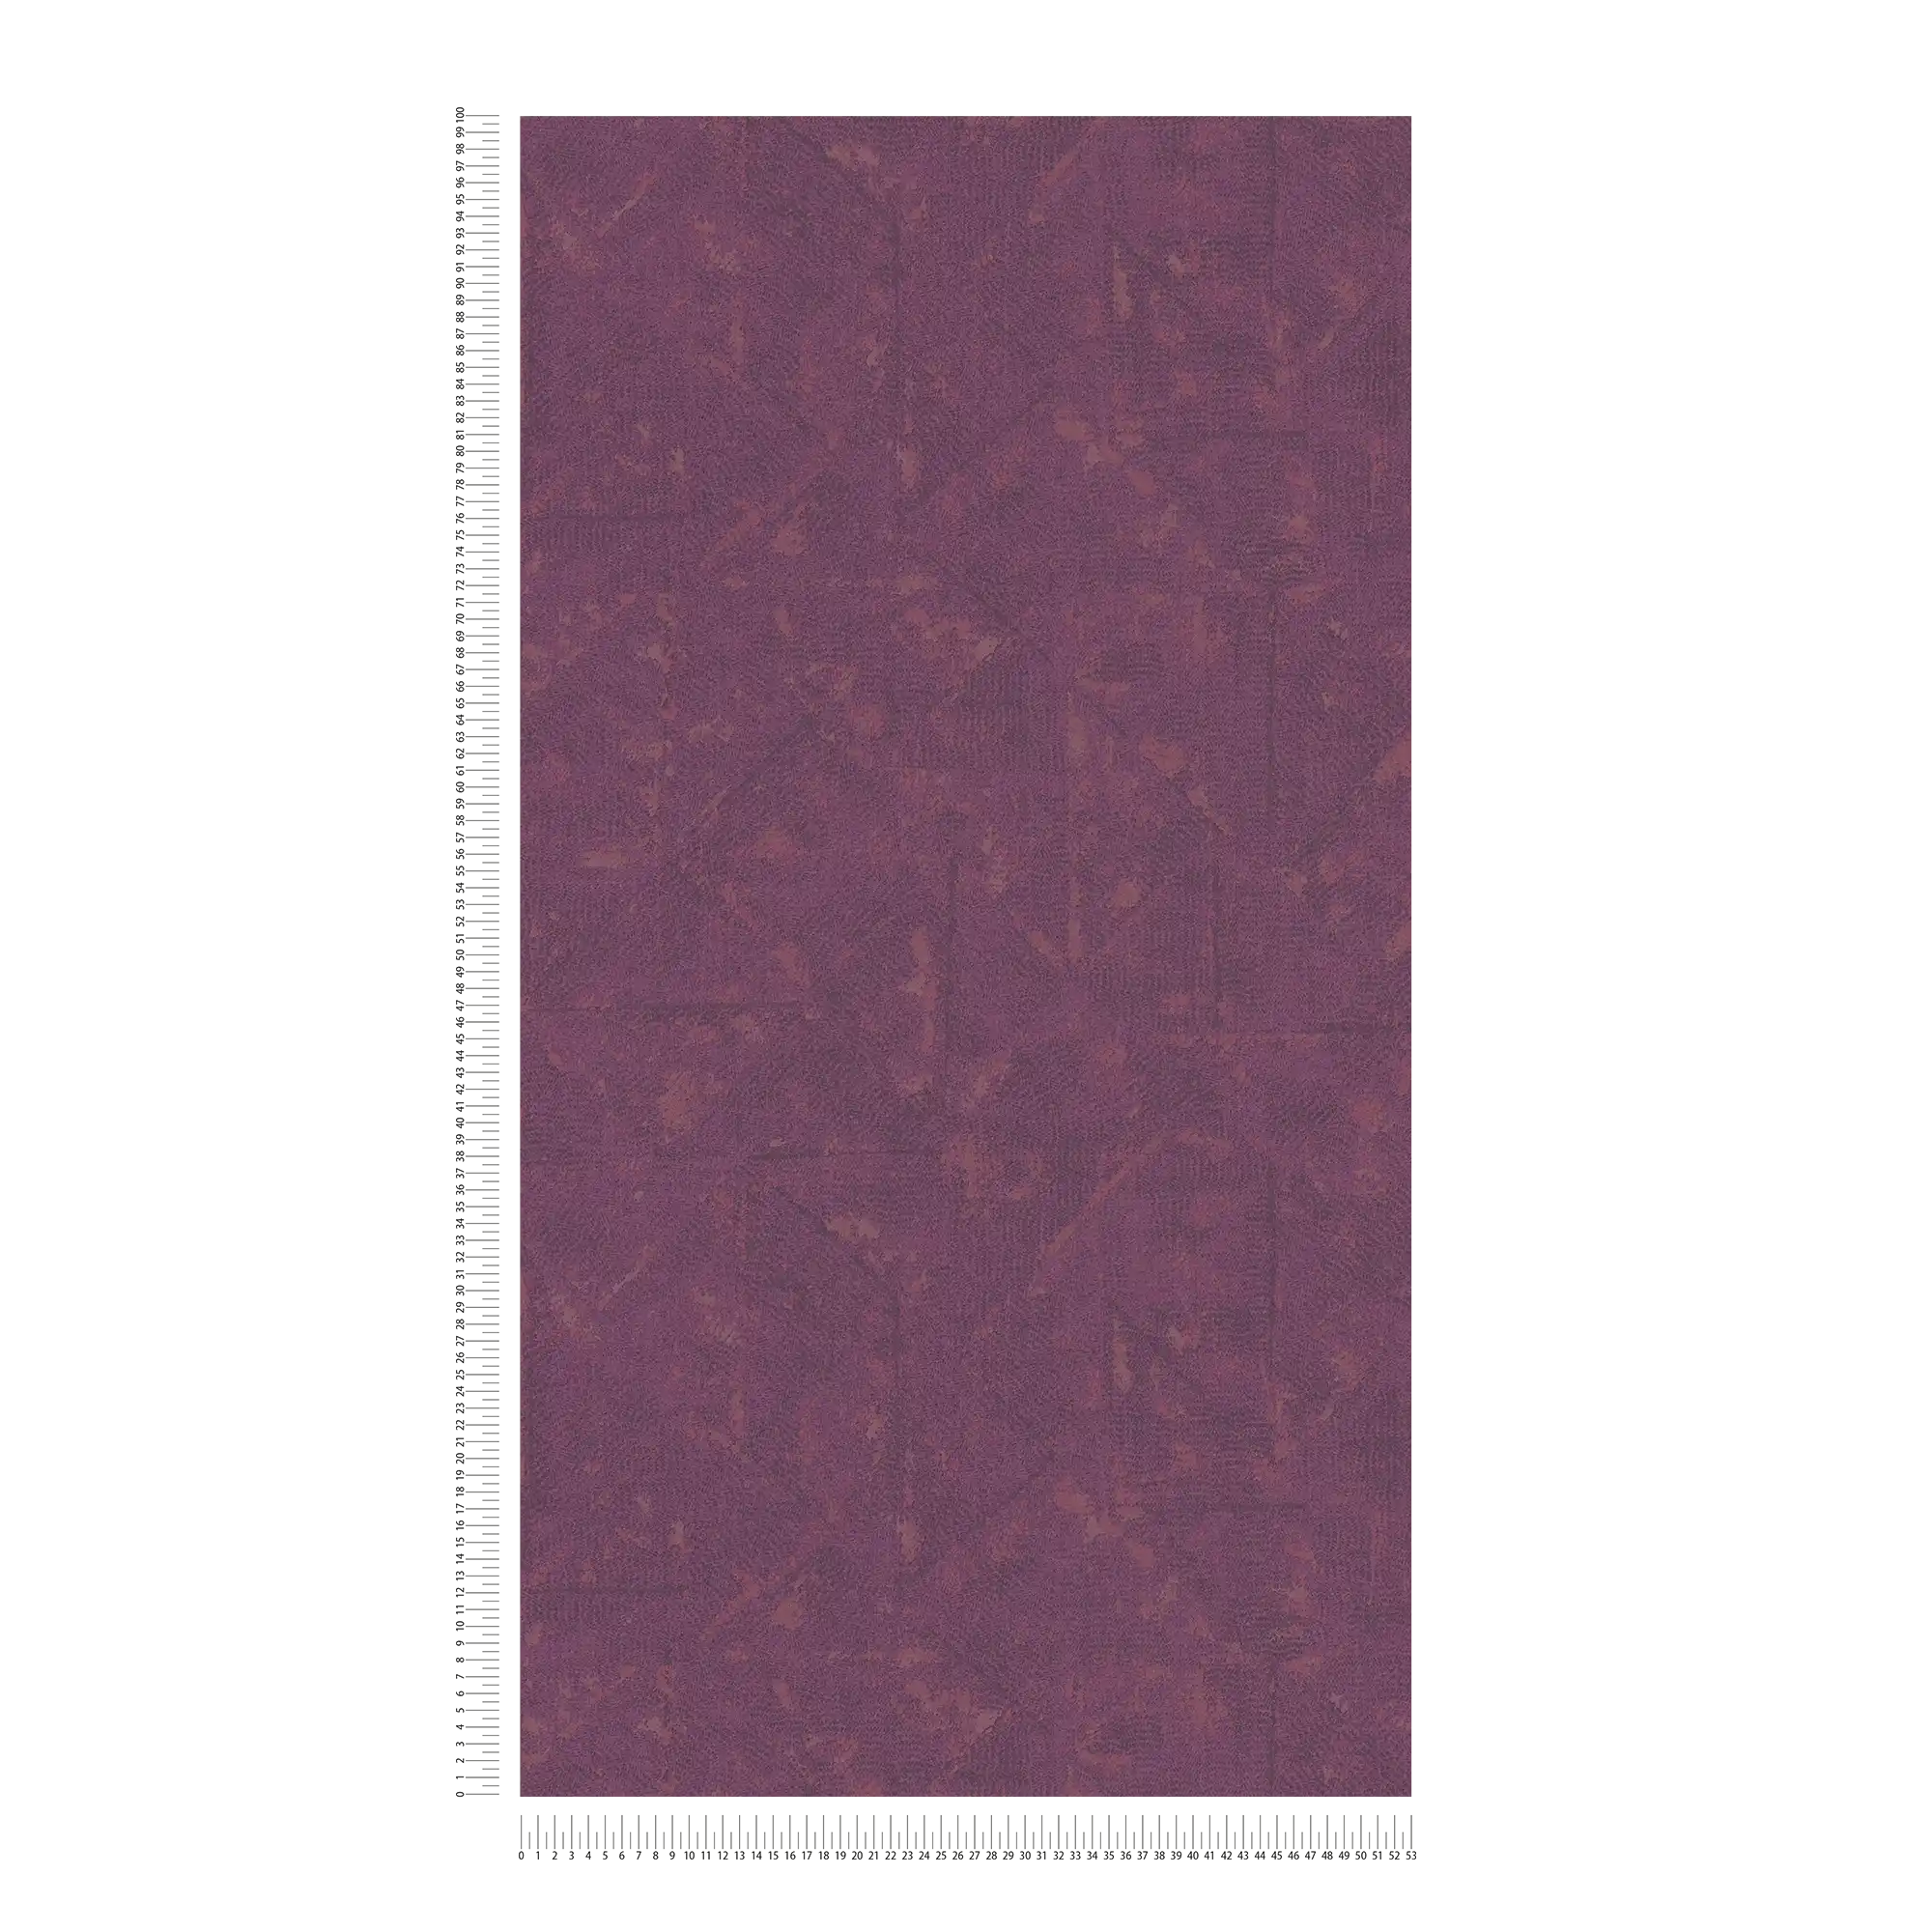             Non-woven wallpaper magenta with asymmetrical pattern - purple
        